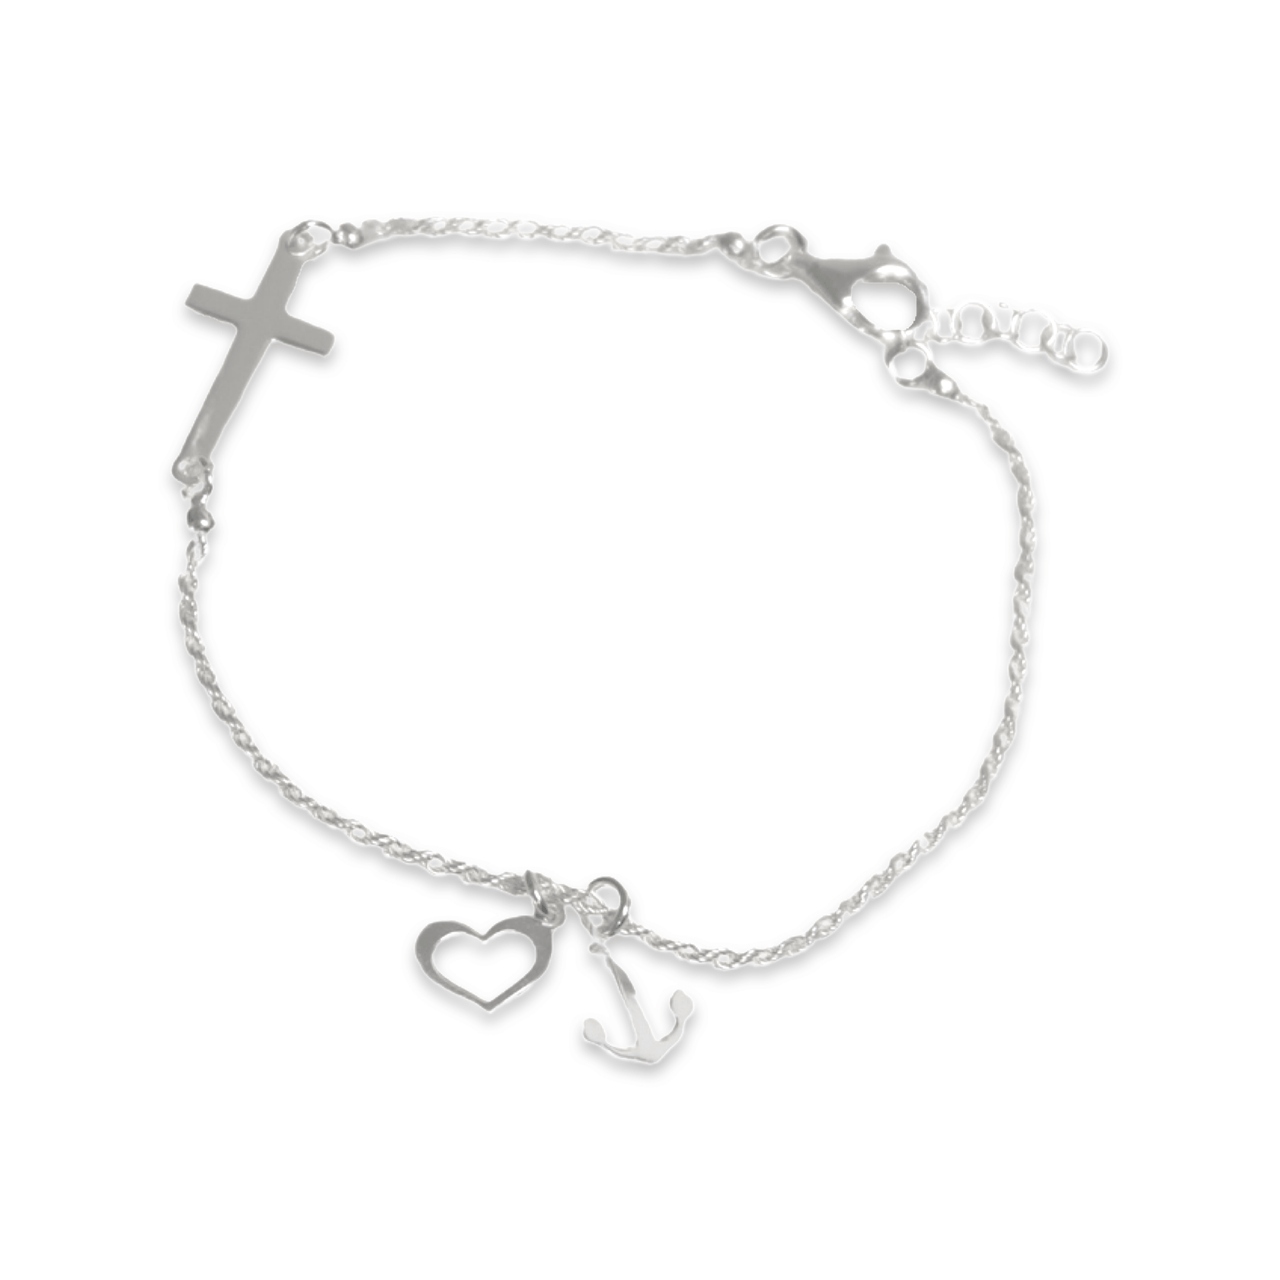 Silver Cross, Heart, & Anchor Bracelet